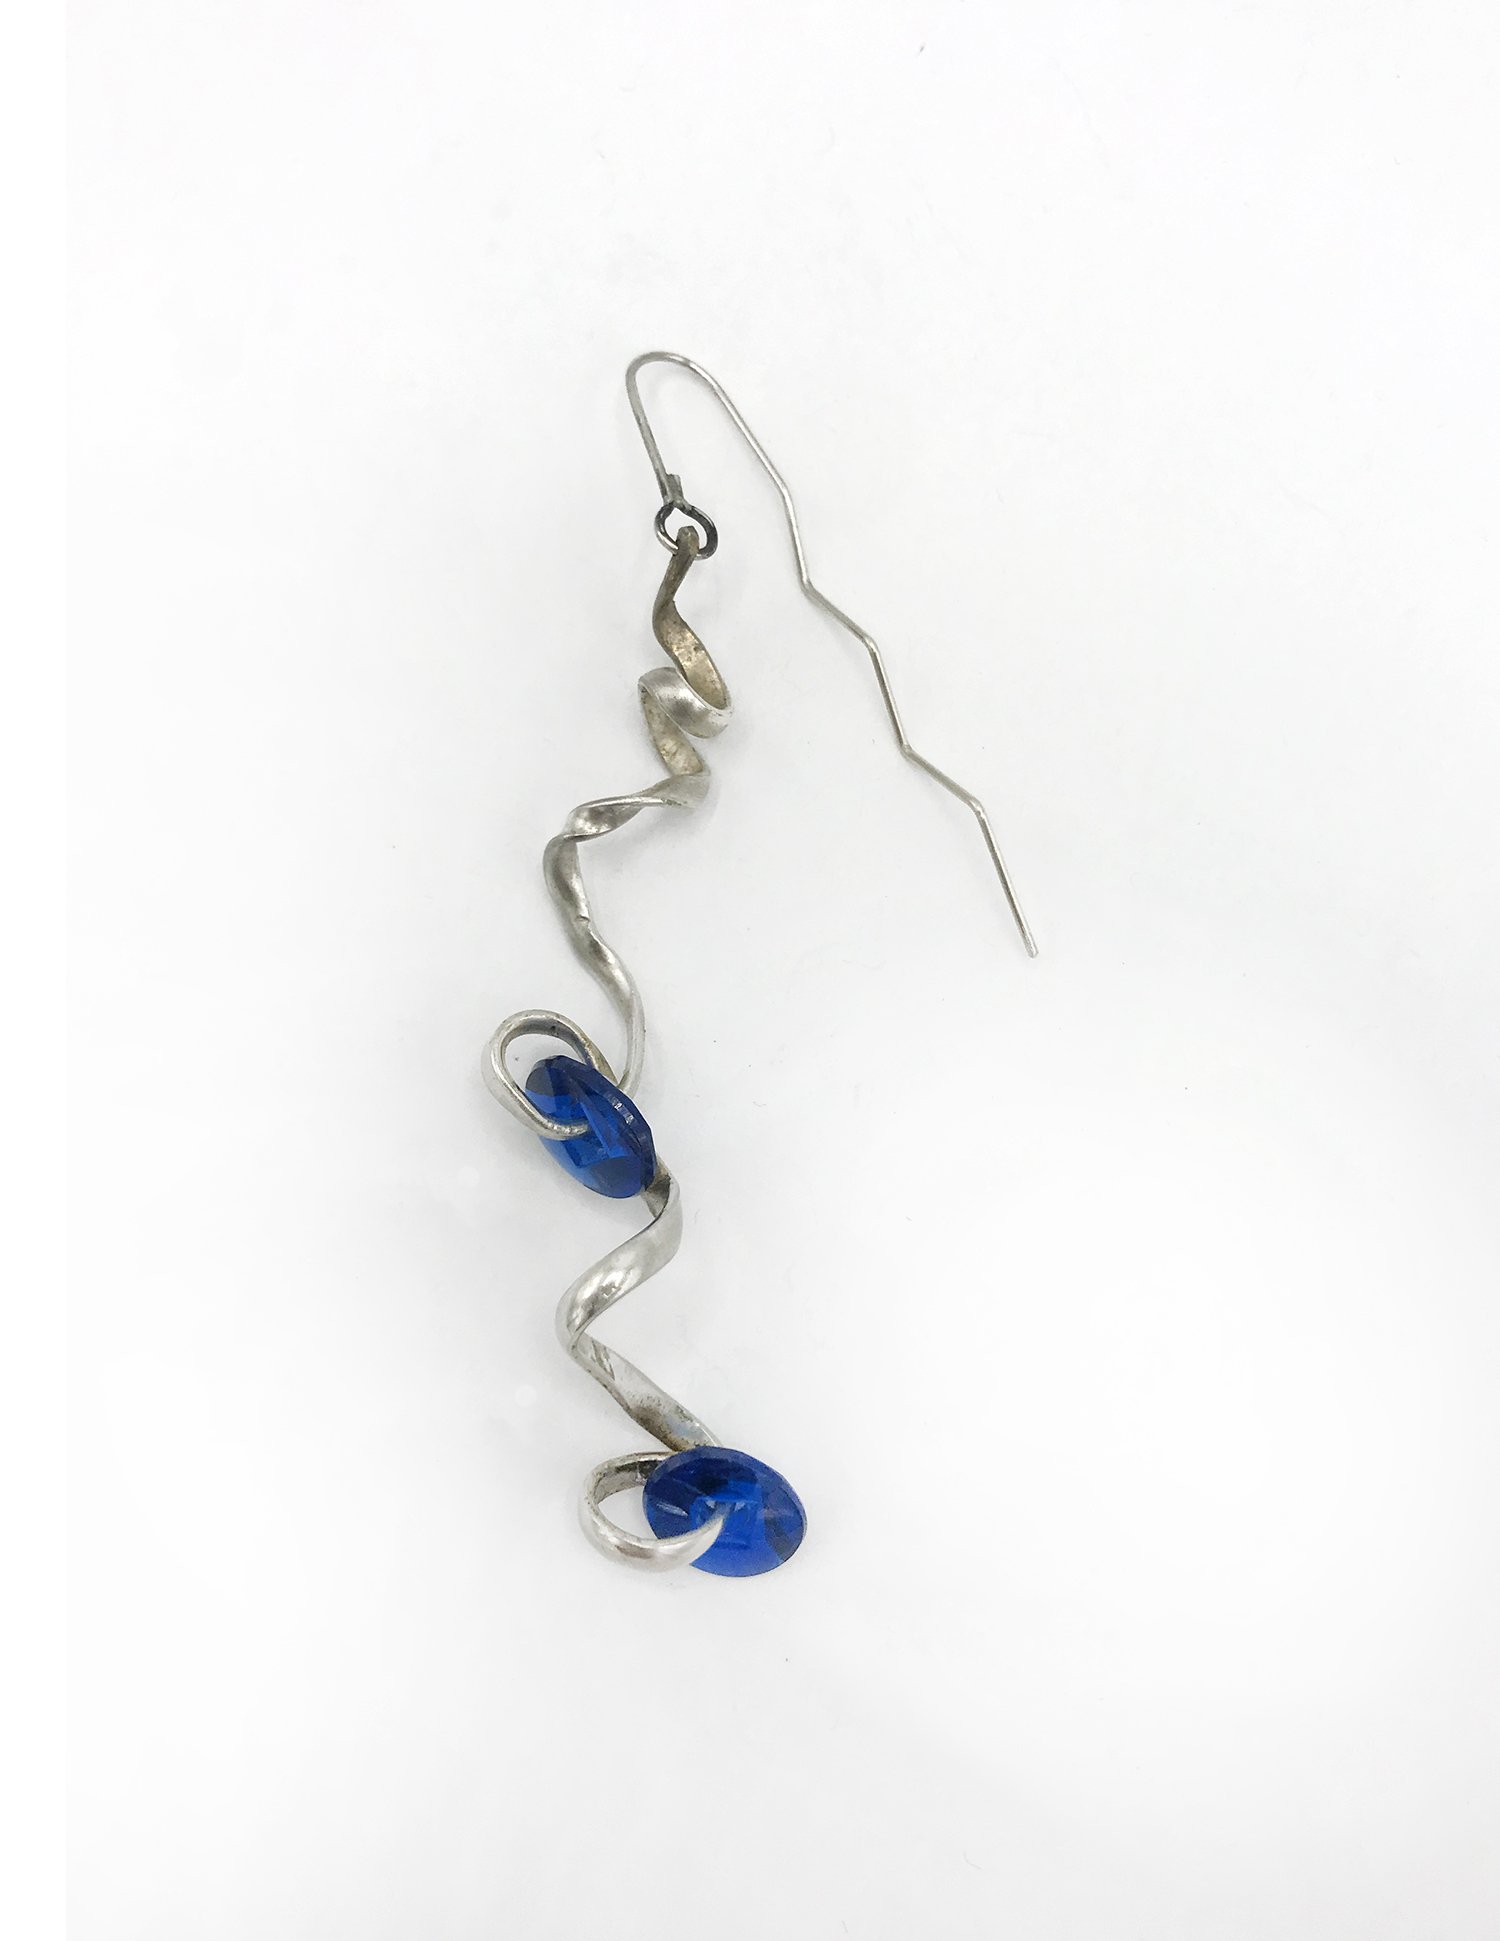 Moneik Schrijer Single earing blue stones.jpg